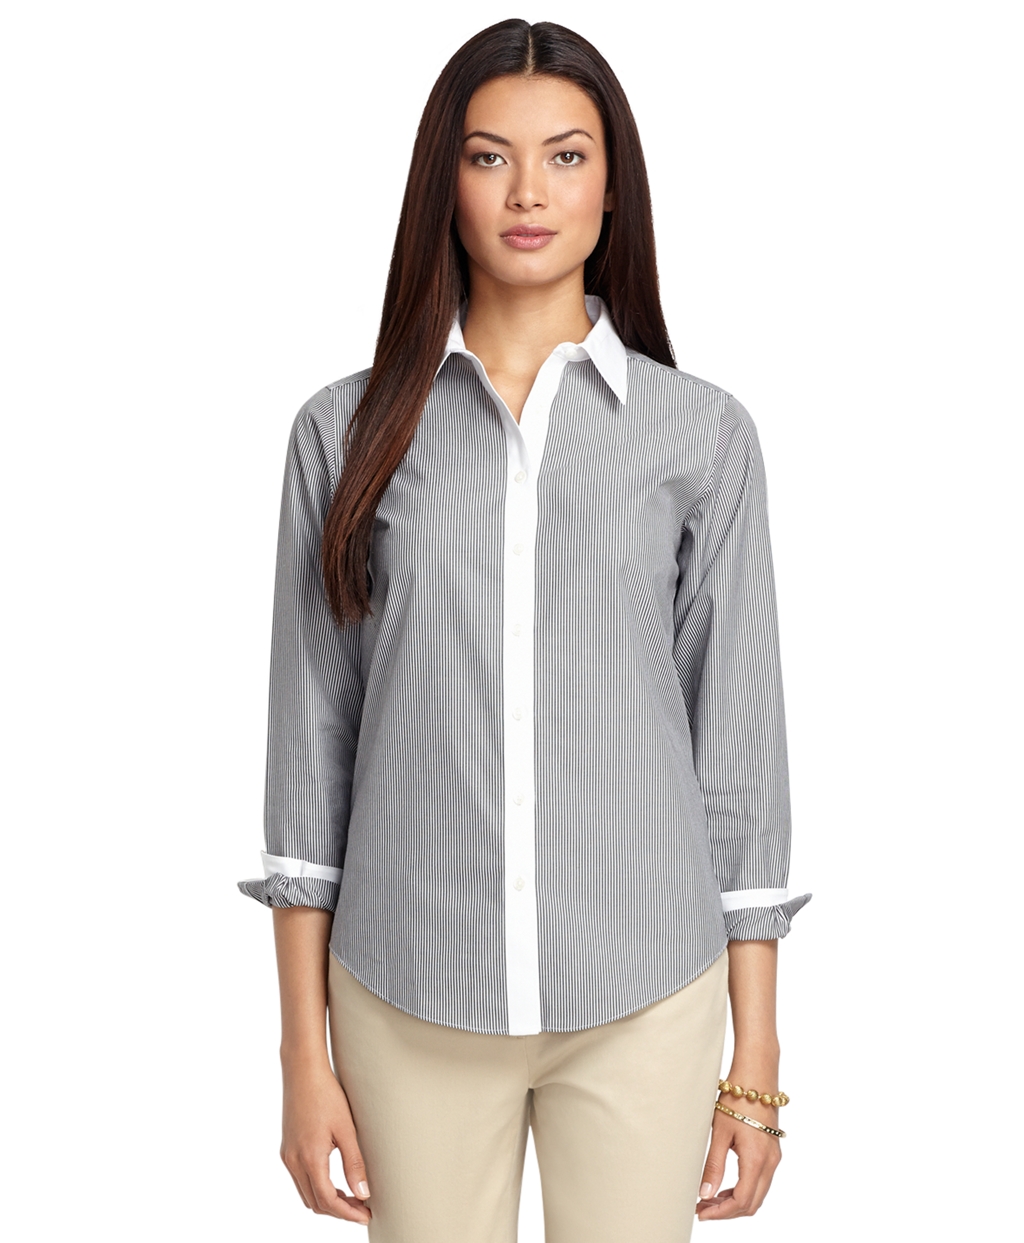 Lyst - Brooks Brothers Classic Fit Noniron Stripe Dress Shirt in Gray